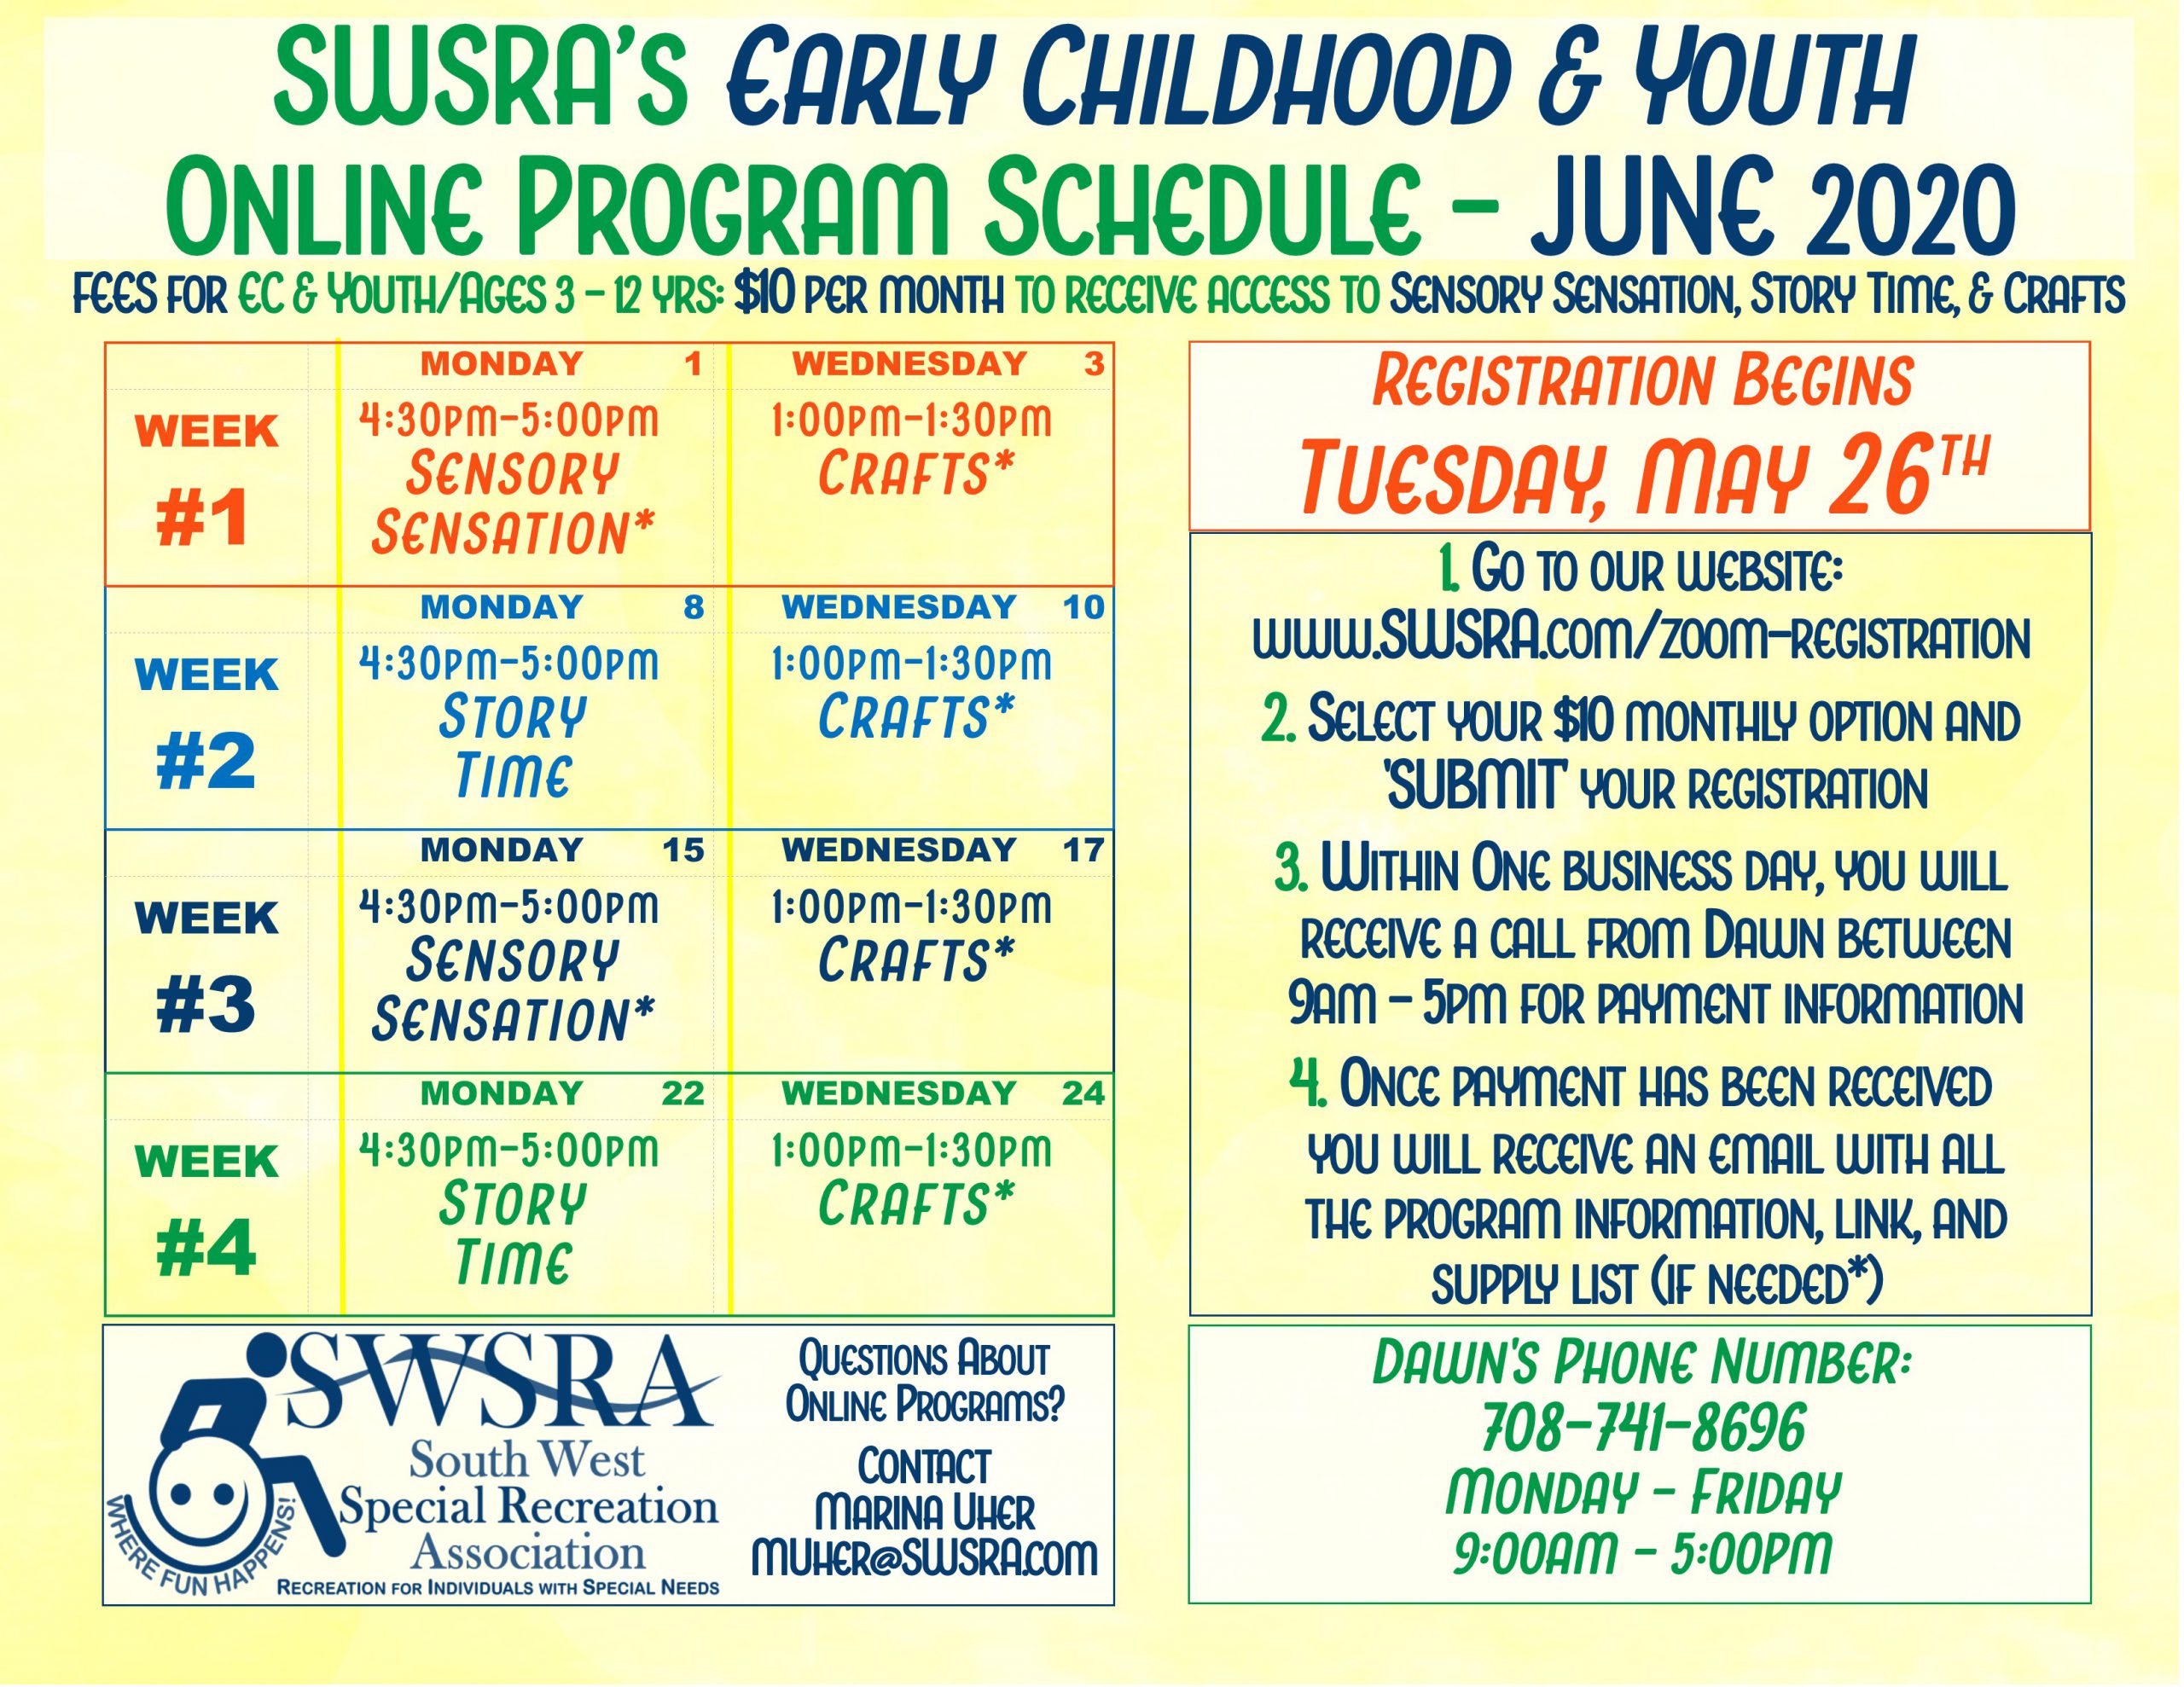 SWSRA’s Online Program Schedule to Worth School District 127